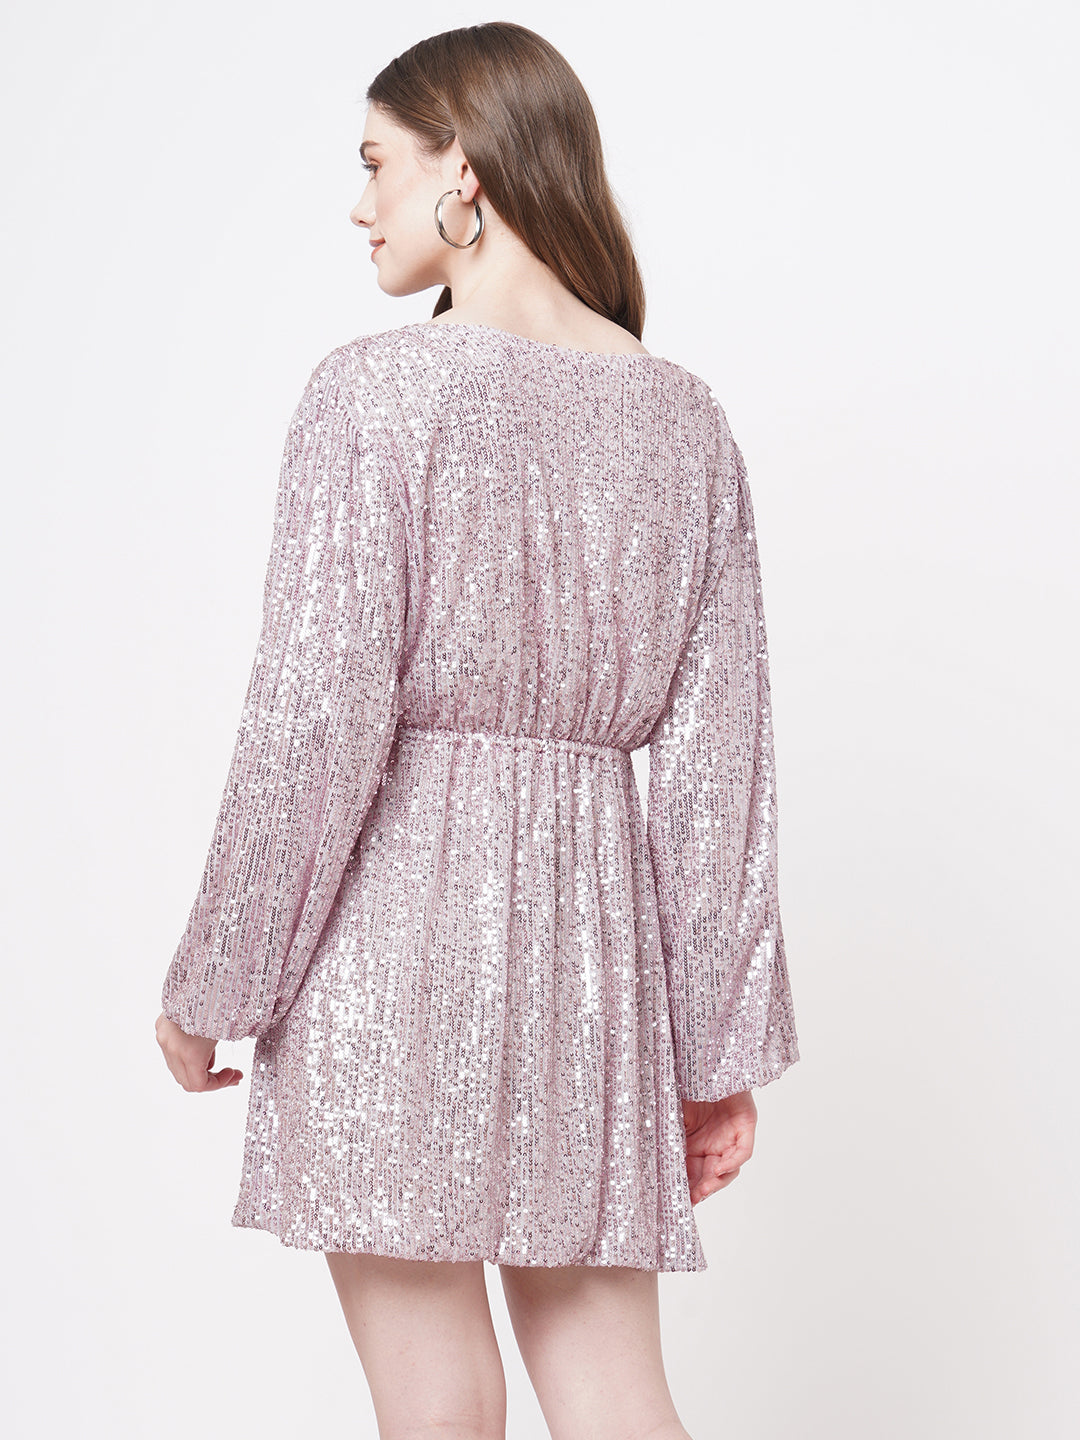 Magical Sparkle Sequin Dress